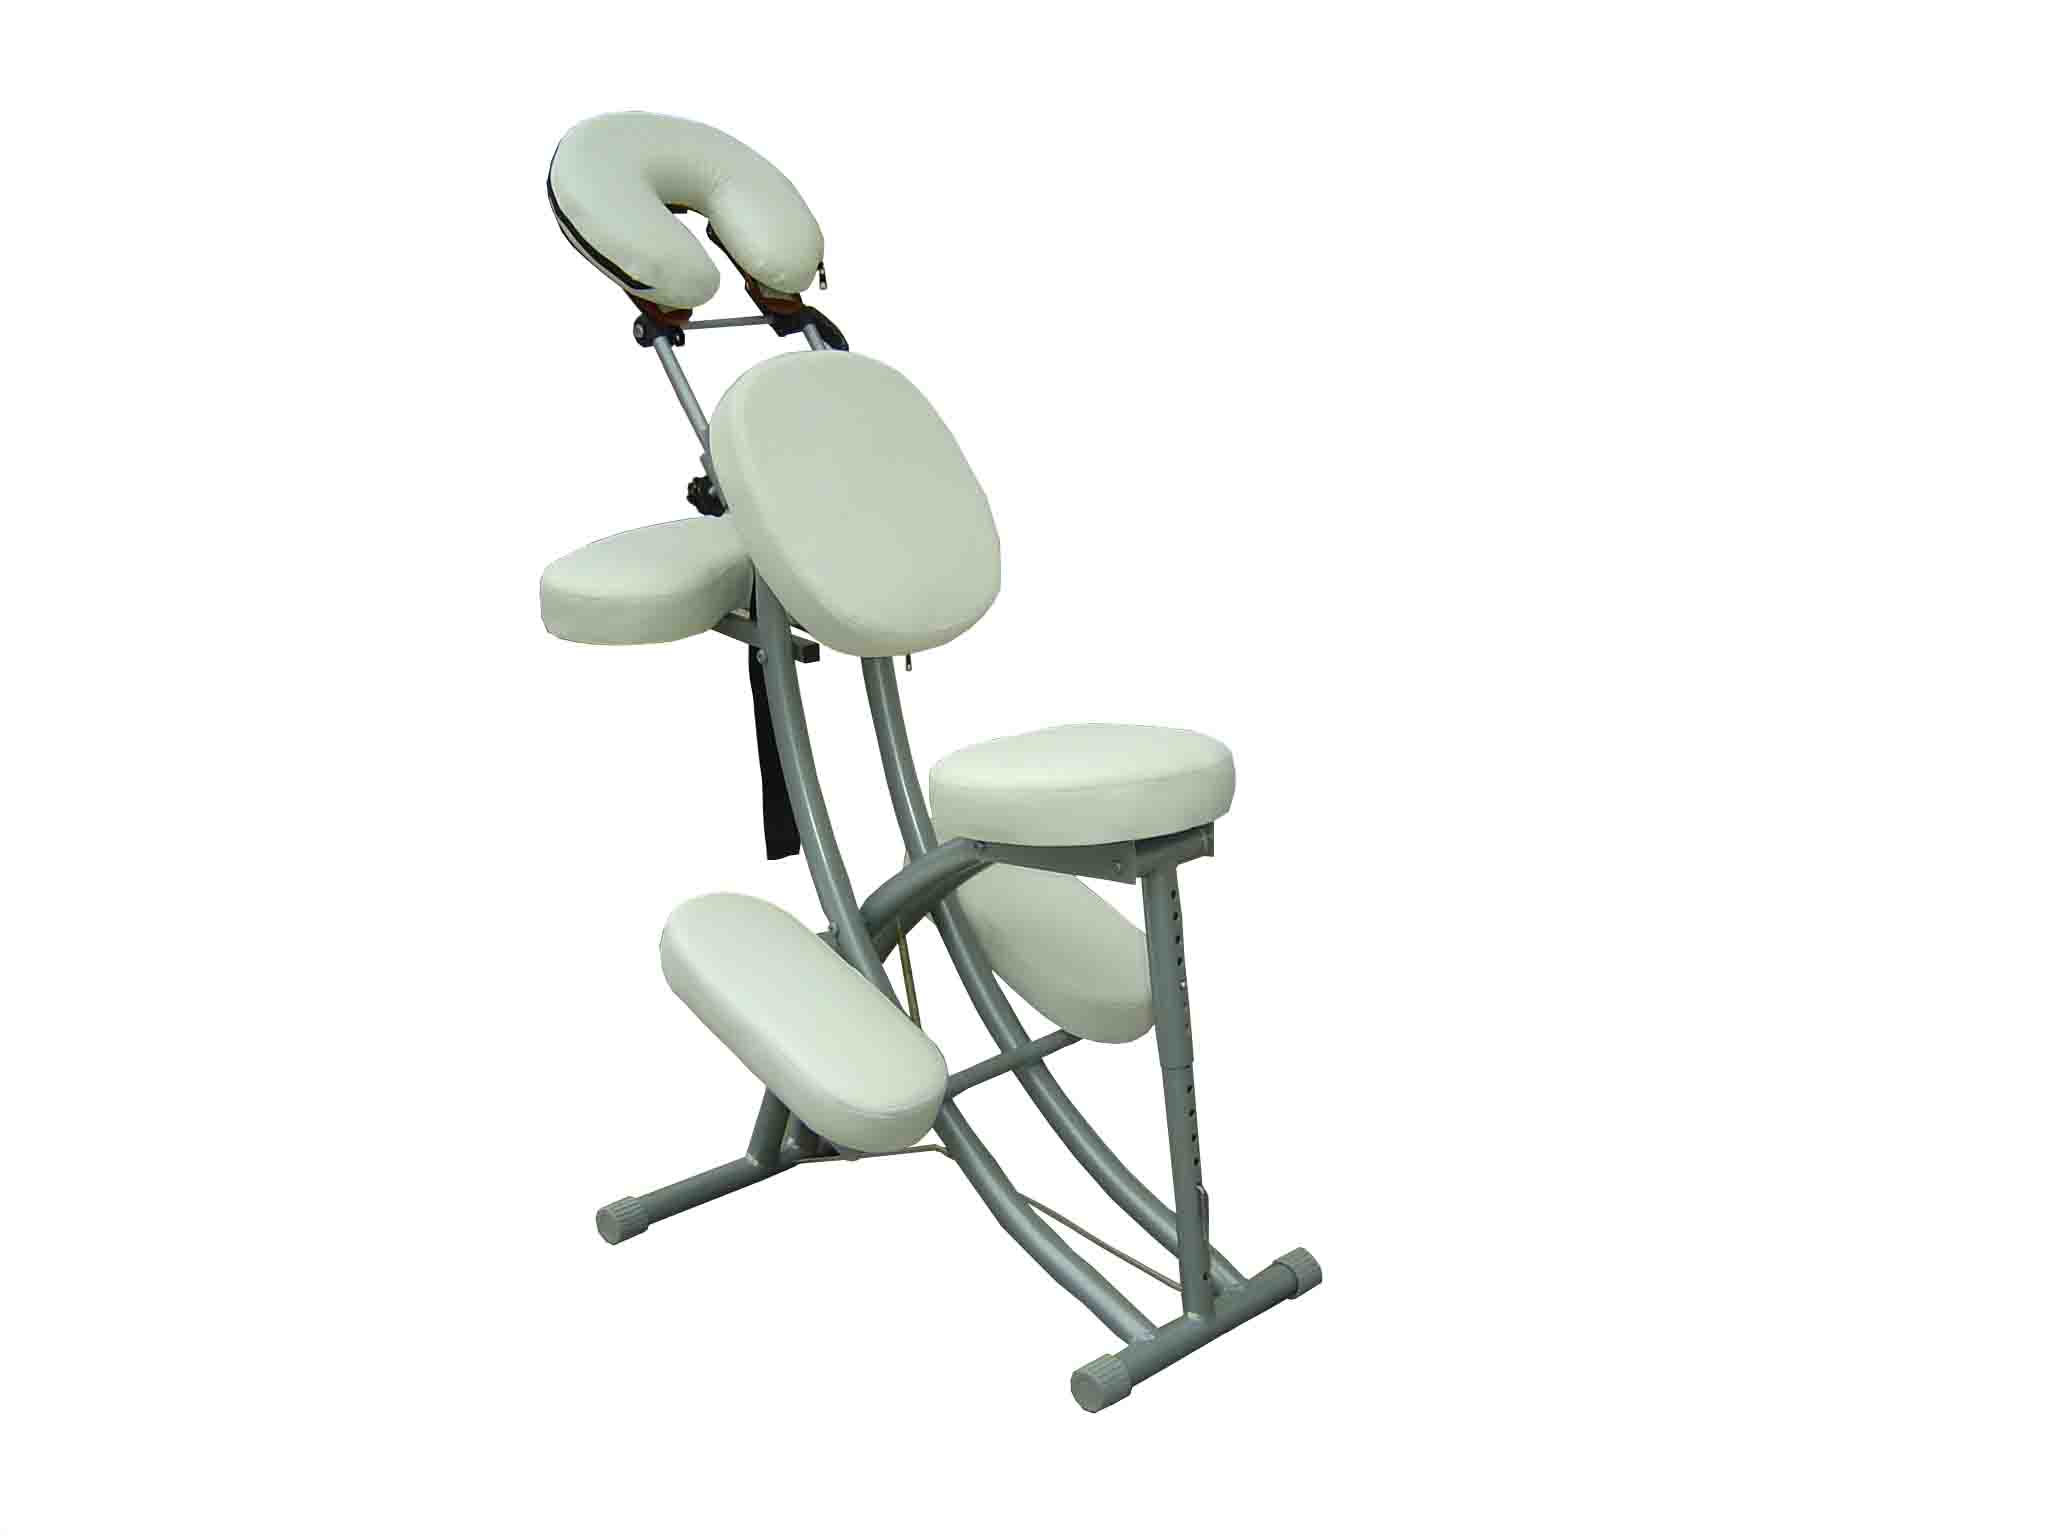  MCA-001 Aluminum Massage Chair ( MCA-001 Aluminum Massage Chair)